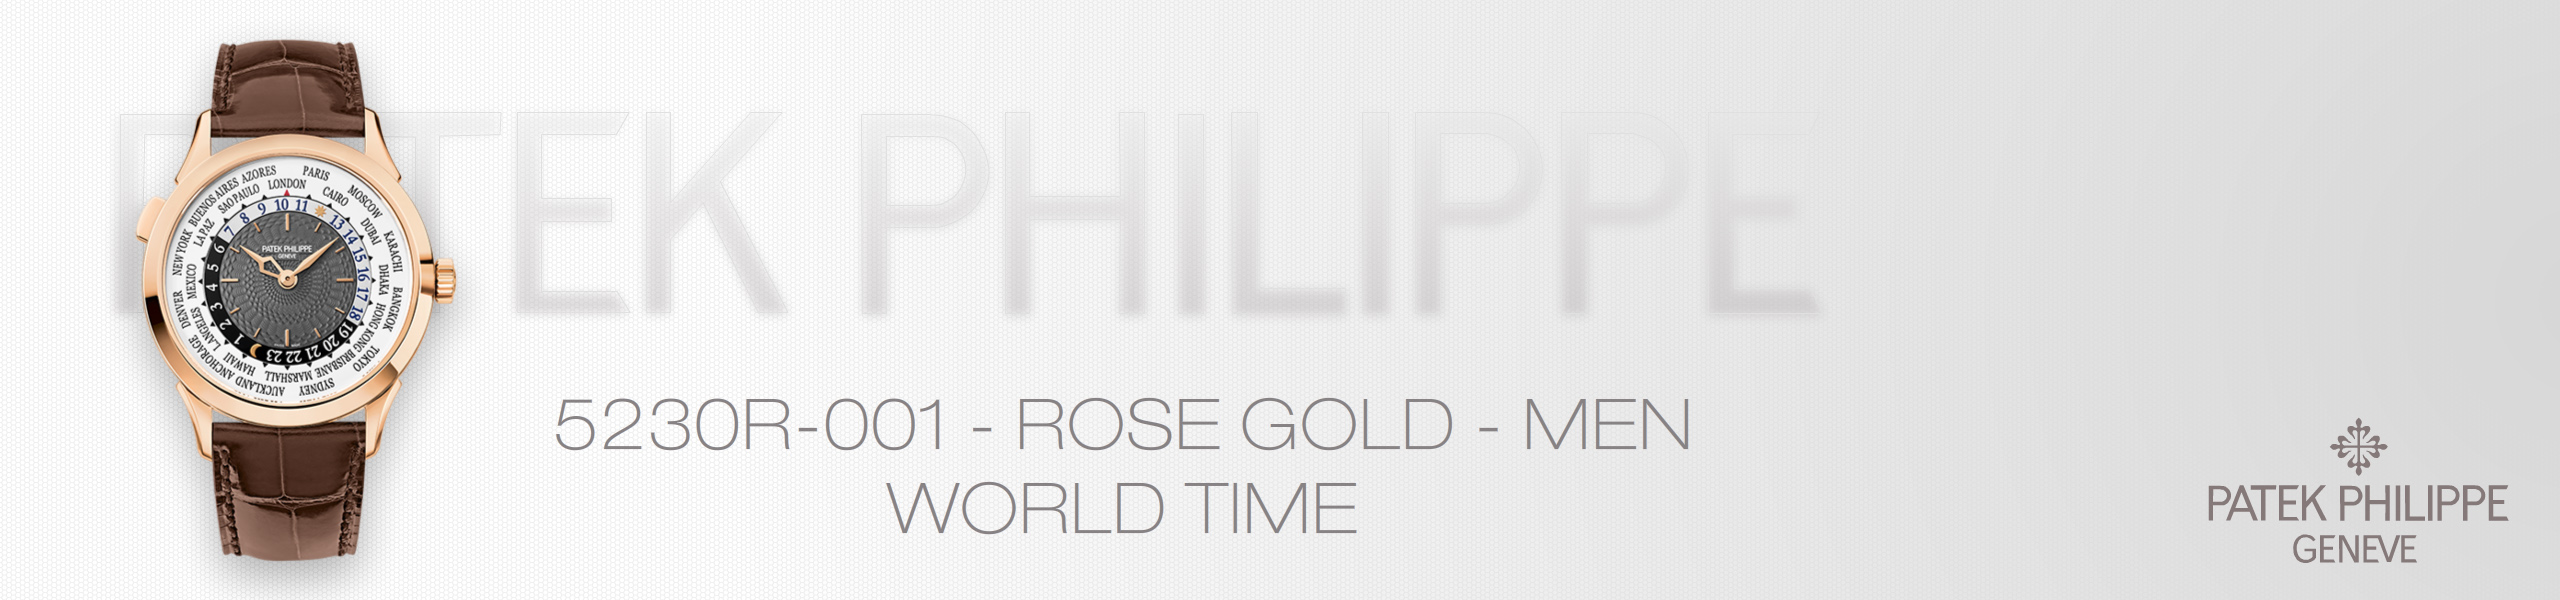 Patek Philippe World Time watch Ref. 5230